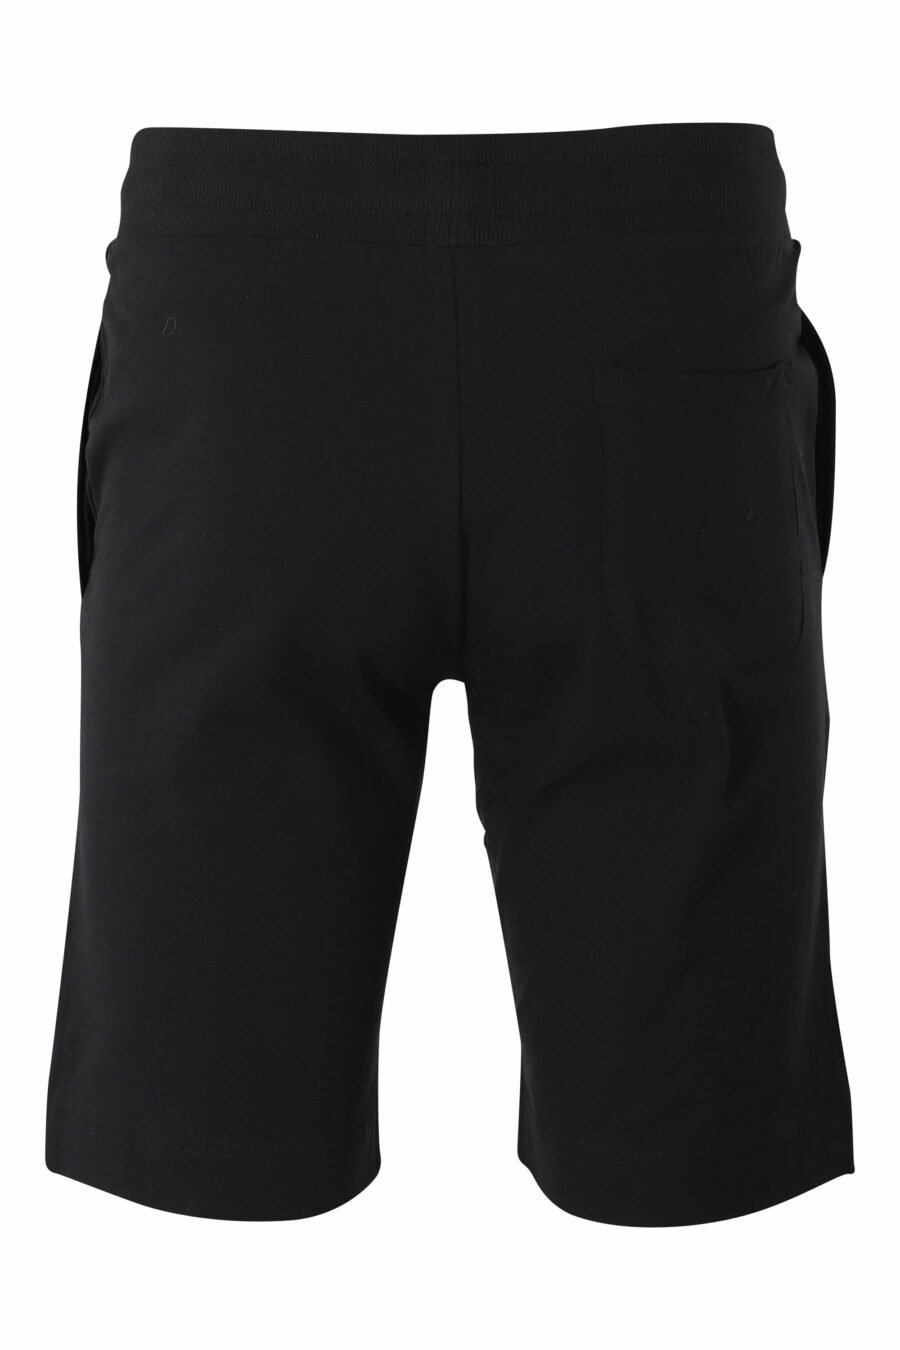 Pantalón de chándal corto negro con mini logo "swim" - IMG 9579